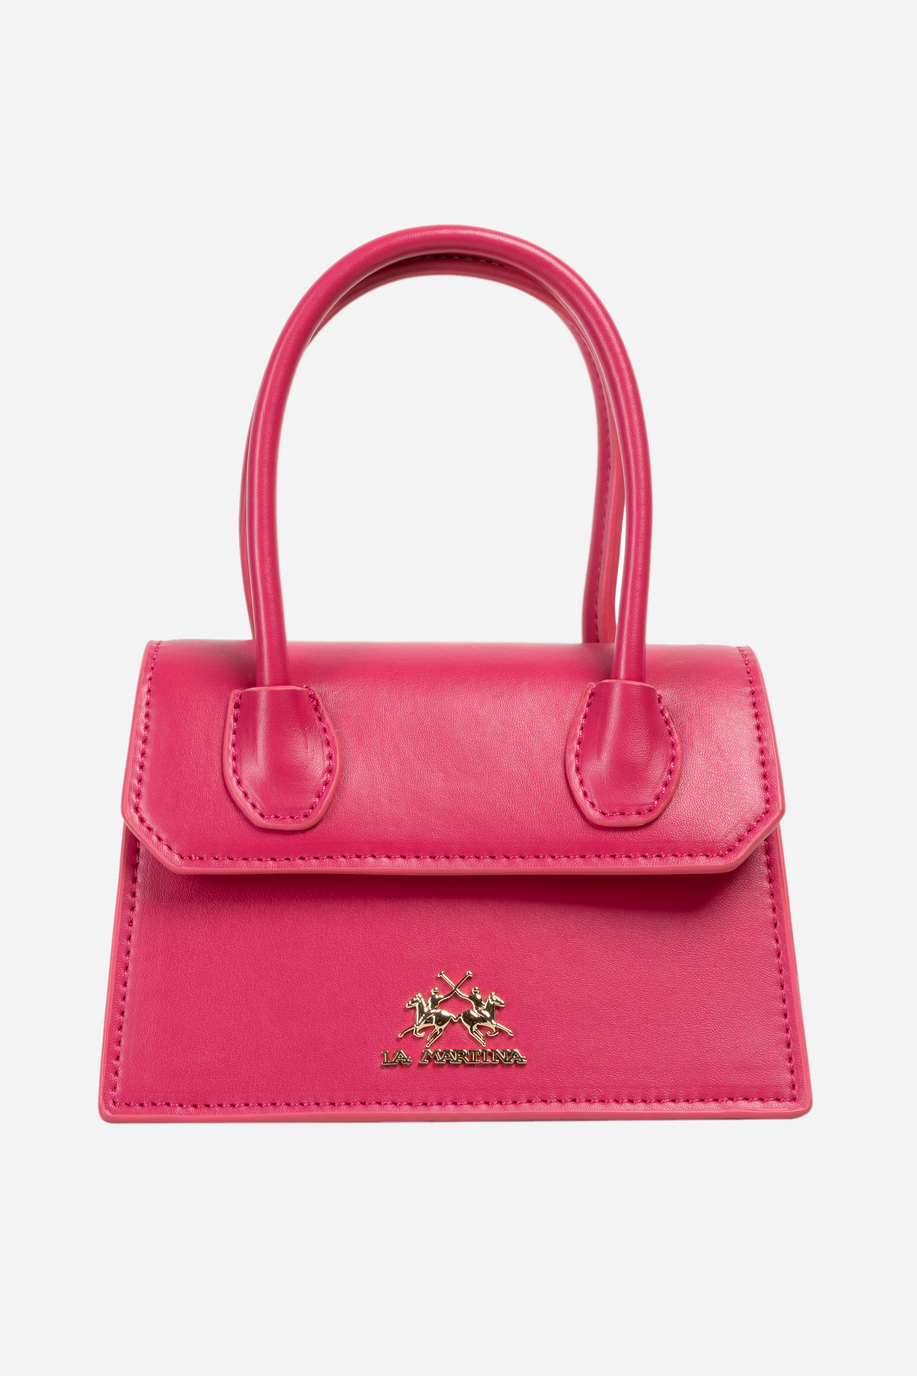 Micro bag in pelle - Heritage - Borse | La Martina - Official Online Shop